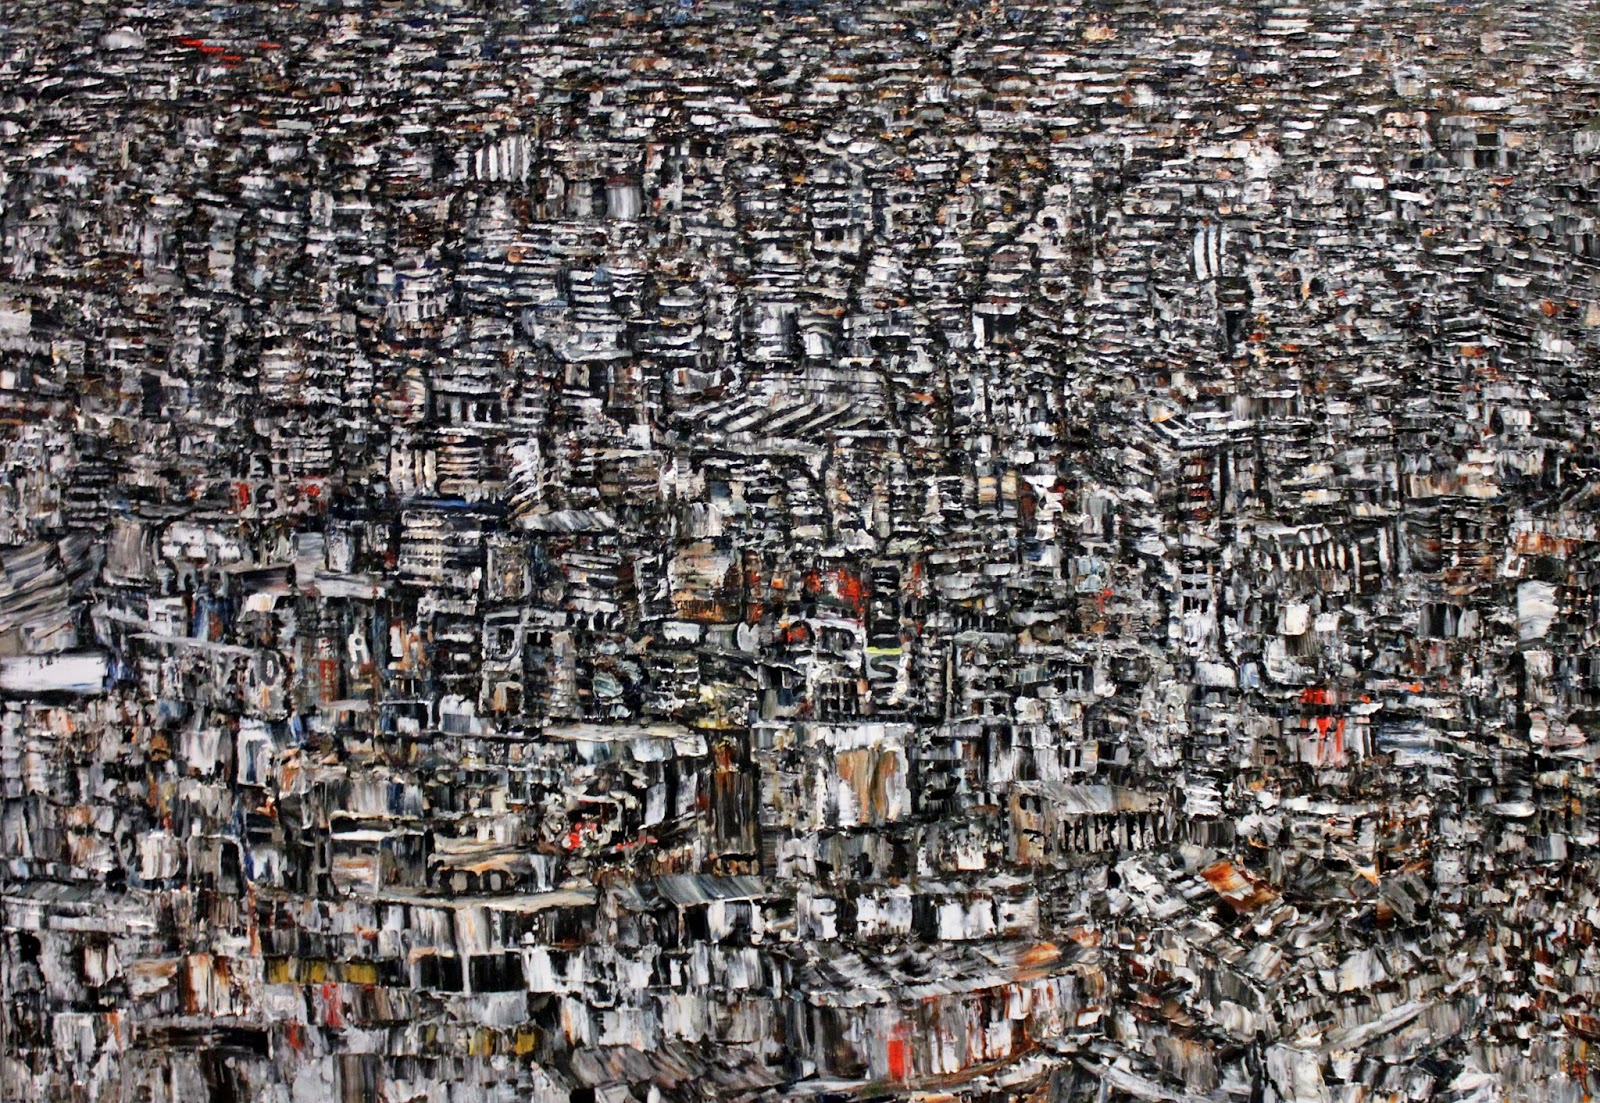 Download this Concrete Jungle Favela picture